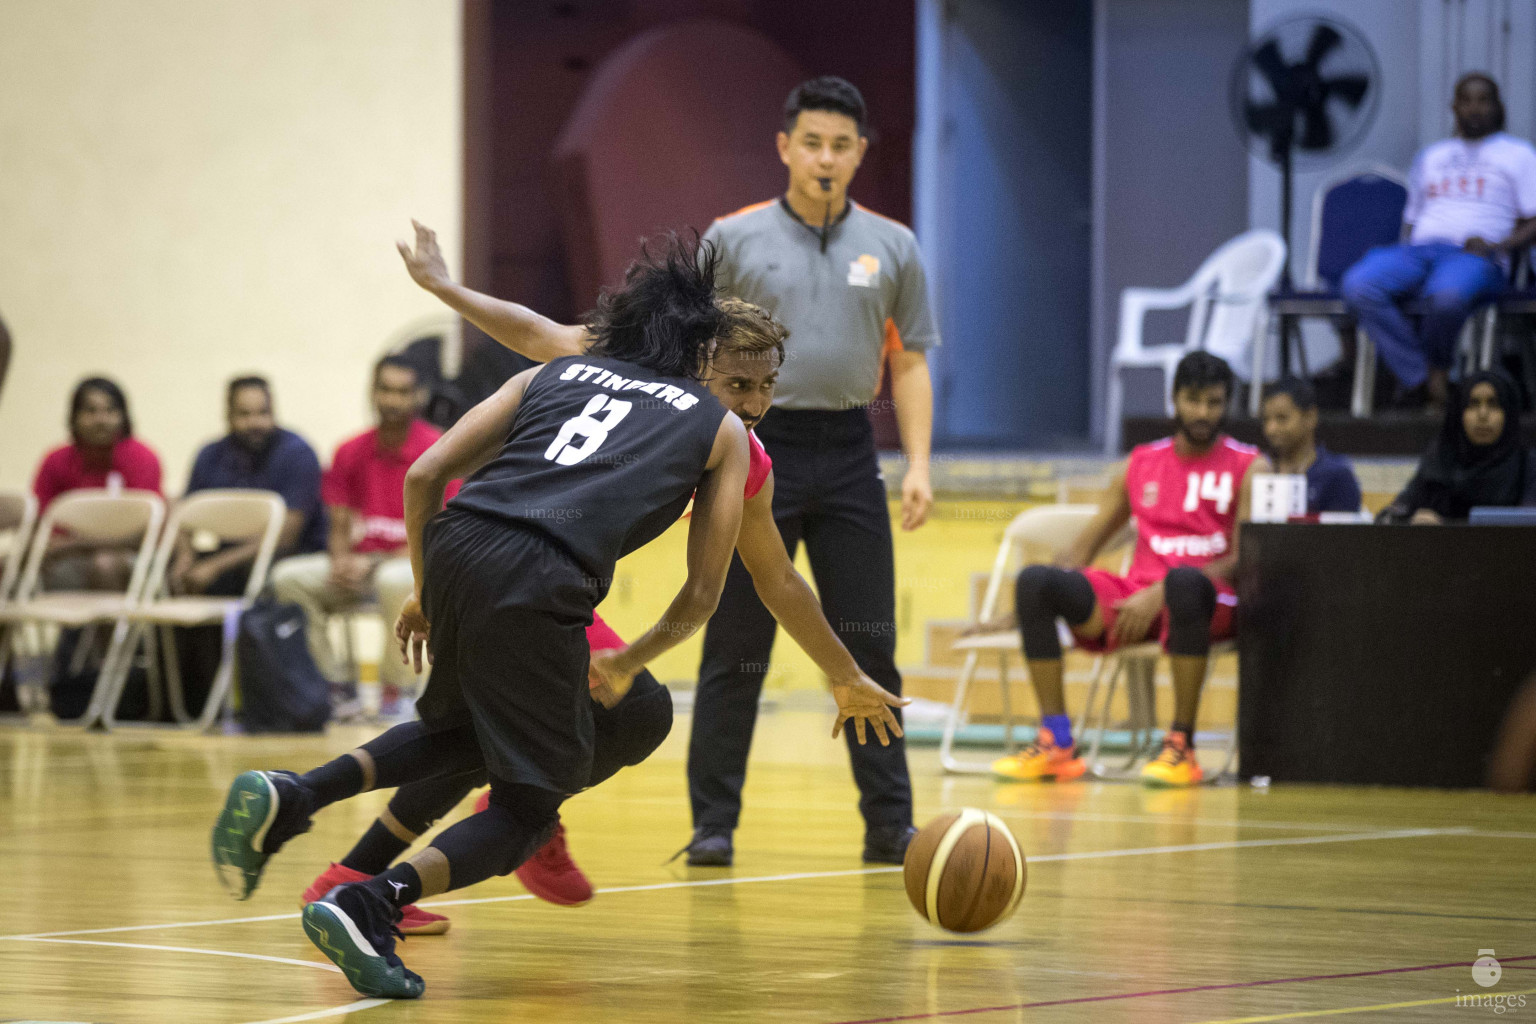 Raptors BC vs Stingers BC in 27th MBA Championship 2019 (Men's Division / Semi Final 1) on Monday, 26th February 2019 in Male', Maldives. Photos: Ismail Thoriq / images.mv